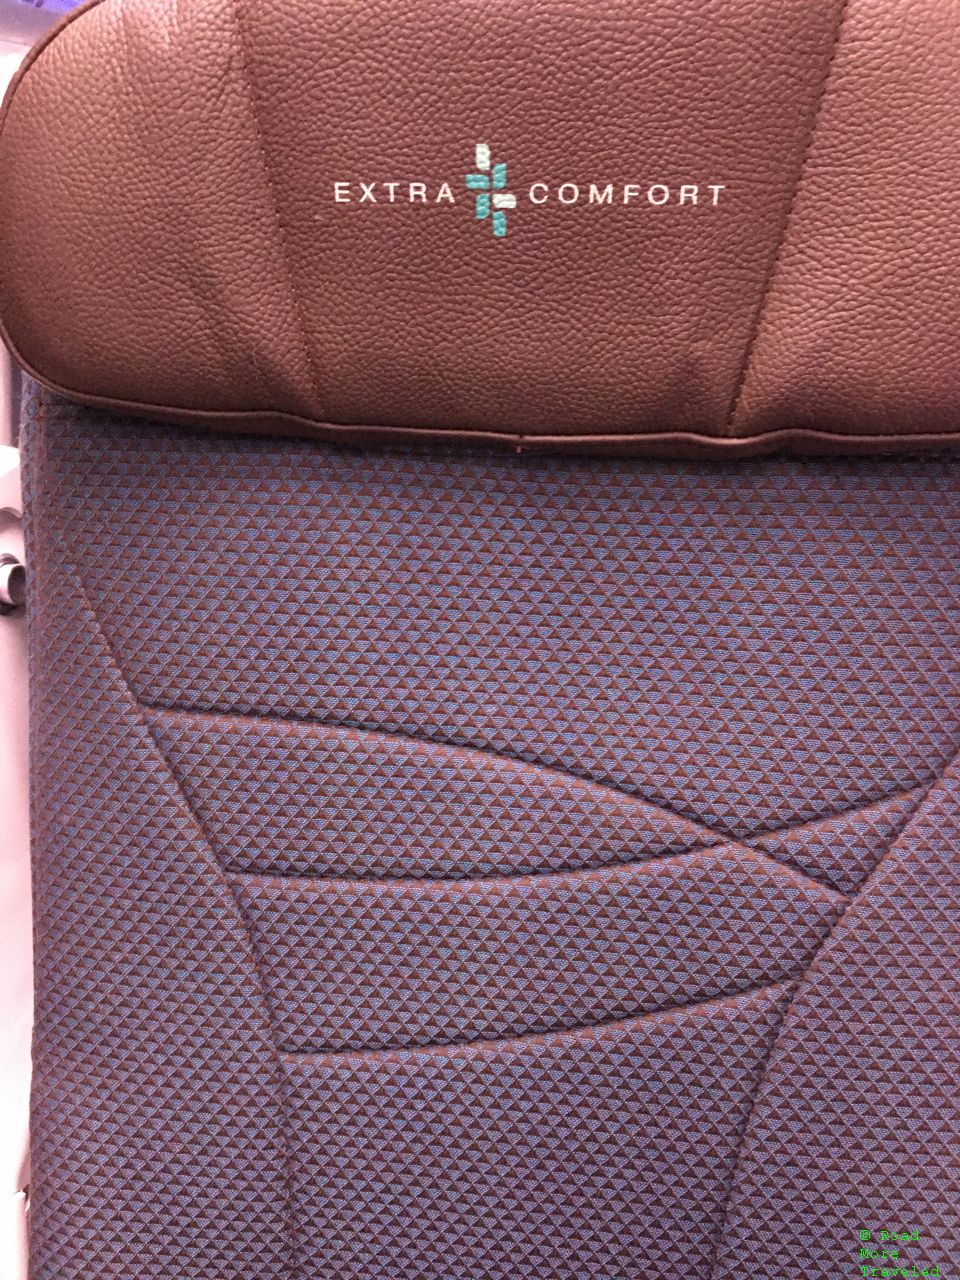 Hawaiian Airlines A321neo Extra Comfort headrest